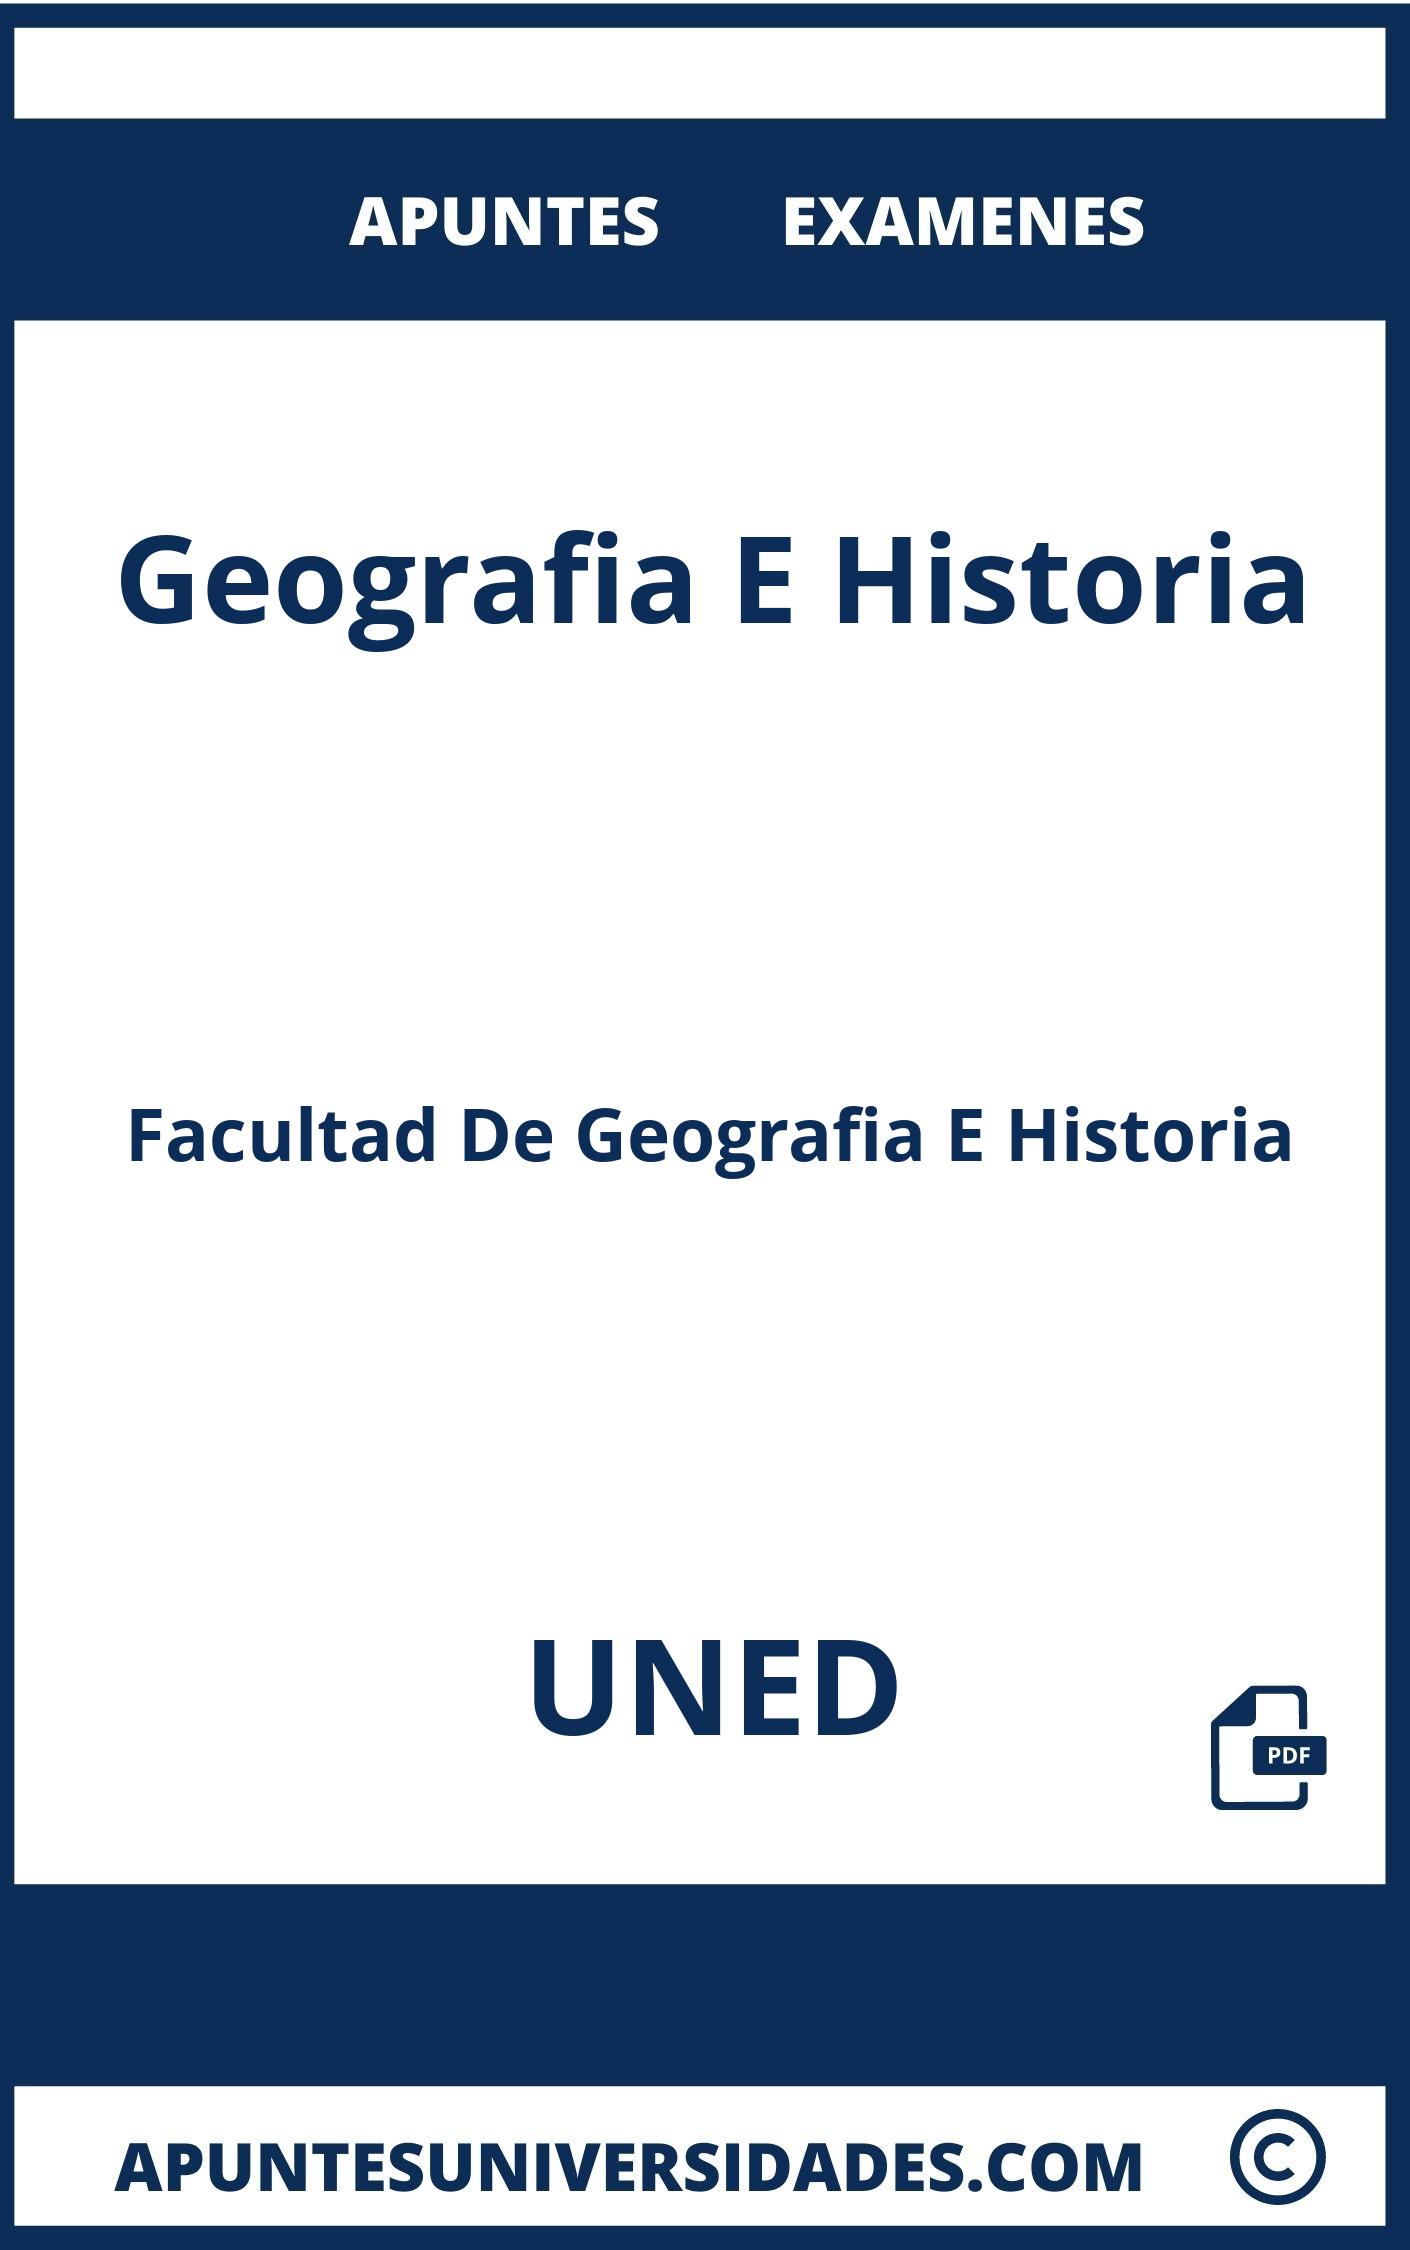 Examenes Apuntes Geografia E Historia UNED